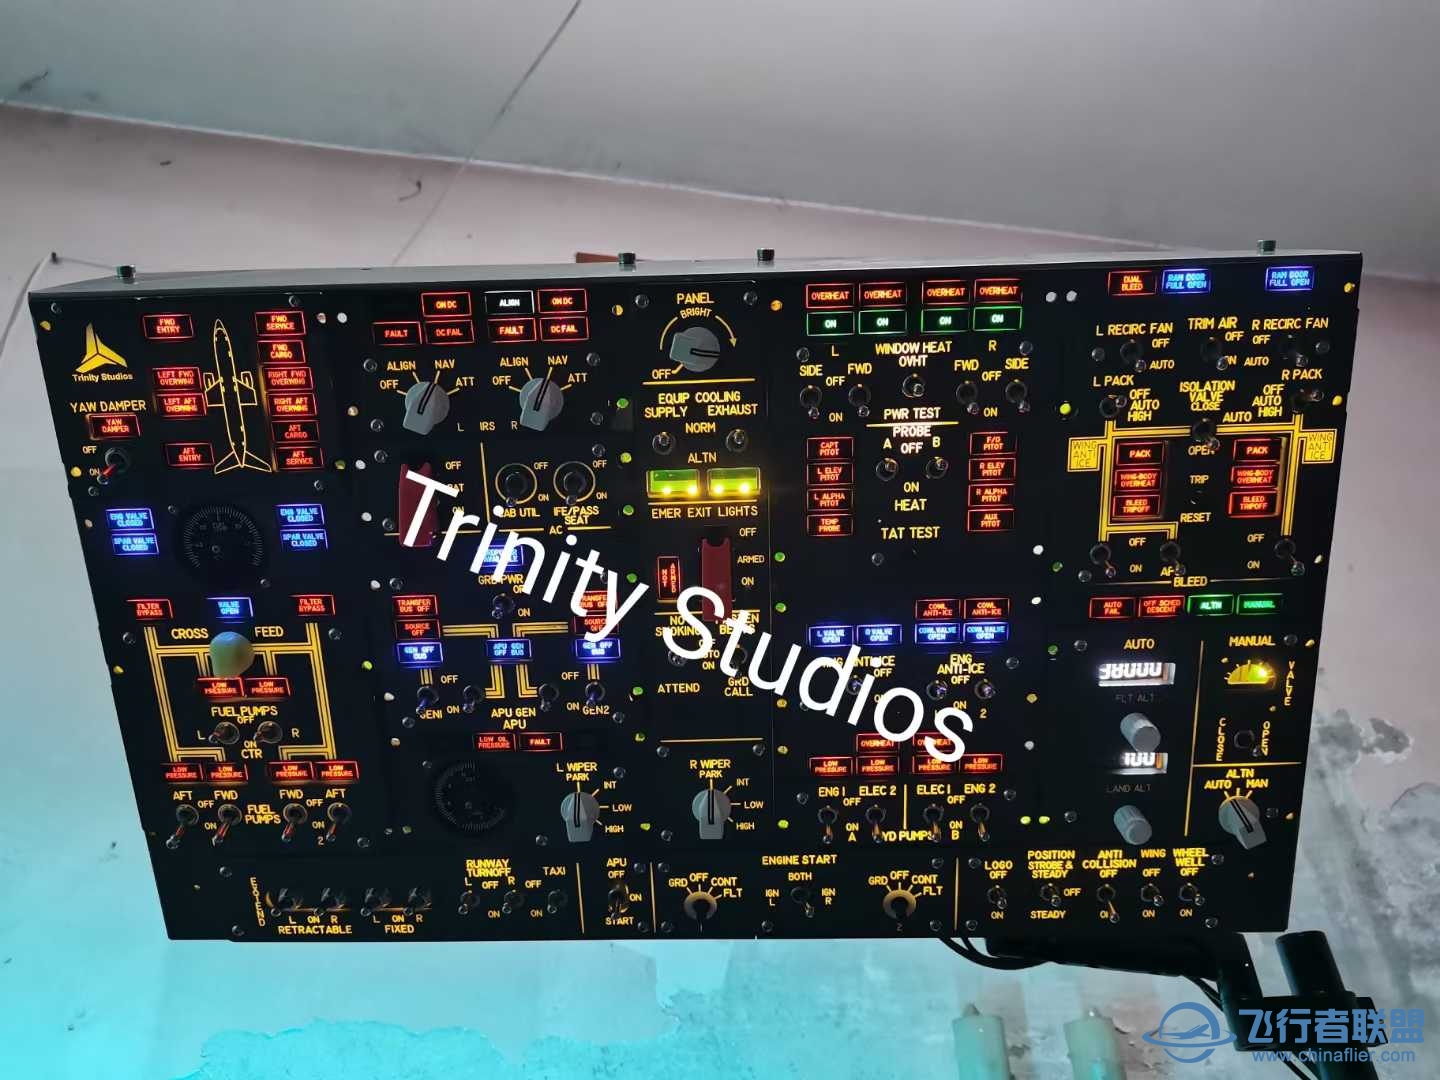 Trinity Studios 新品预告 ——家用版迷你738顶板-2698 